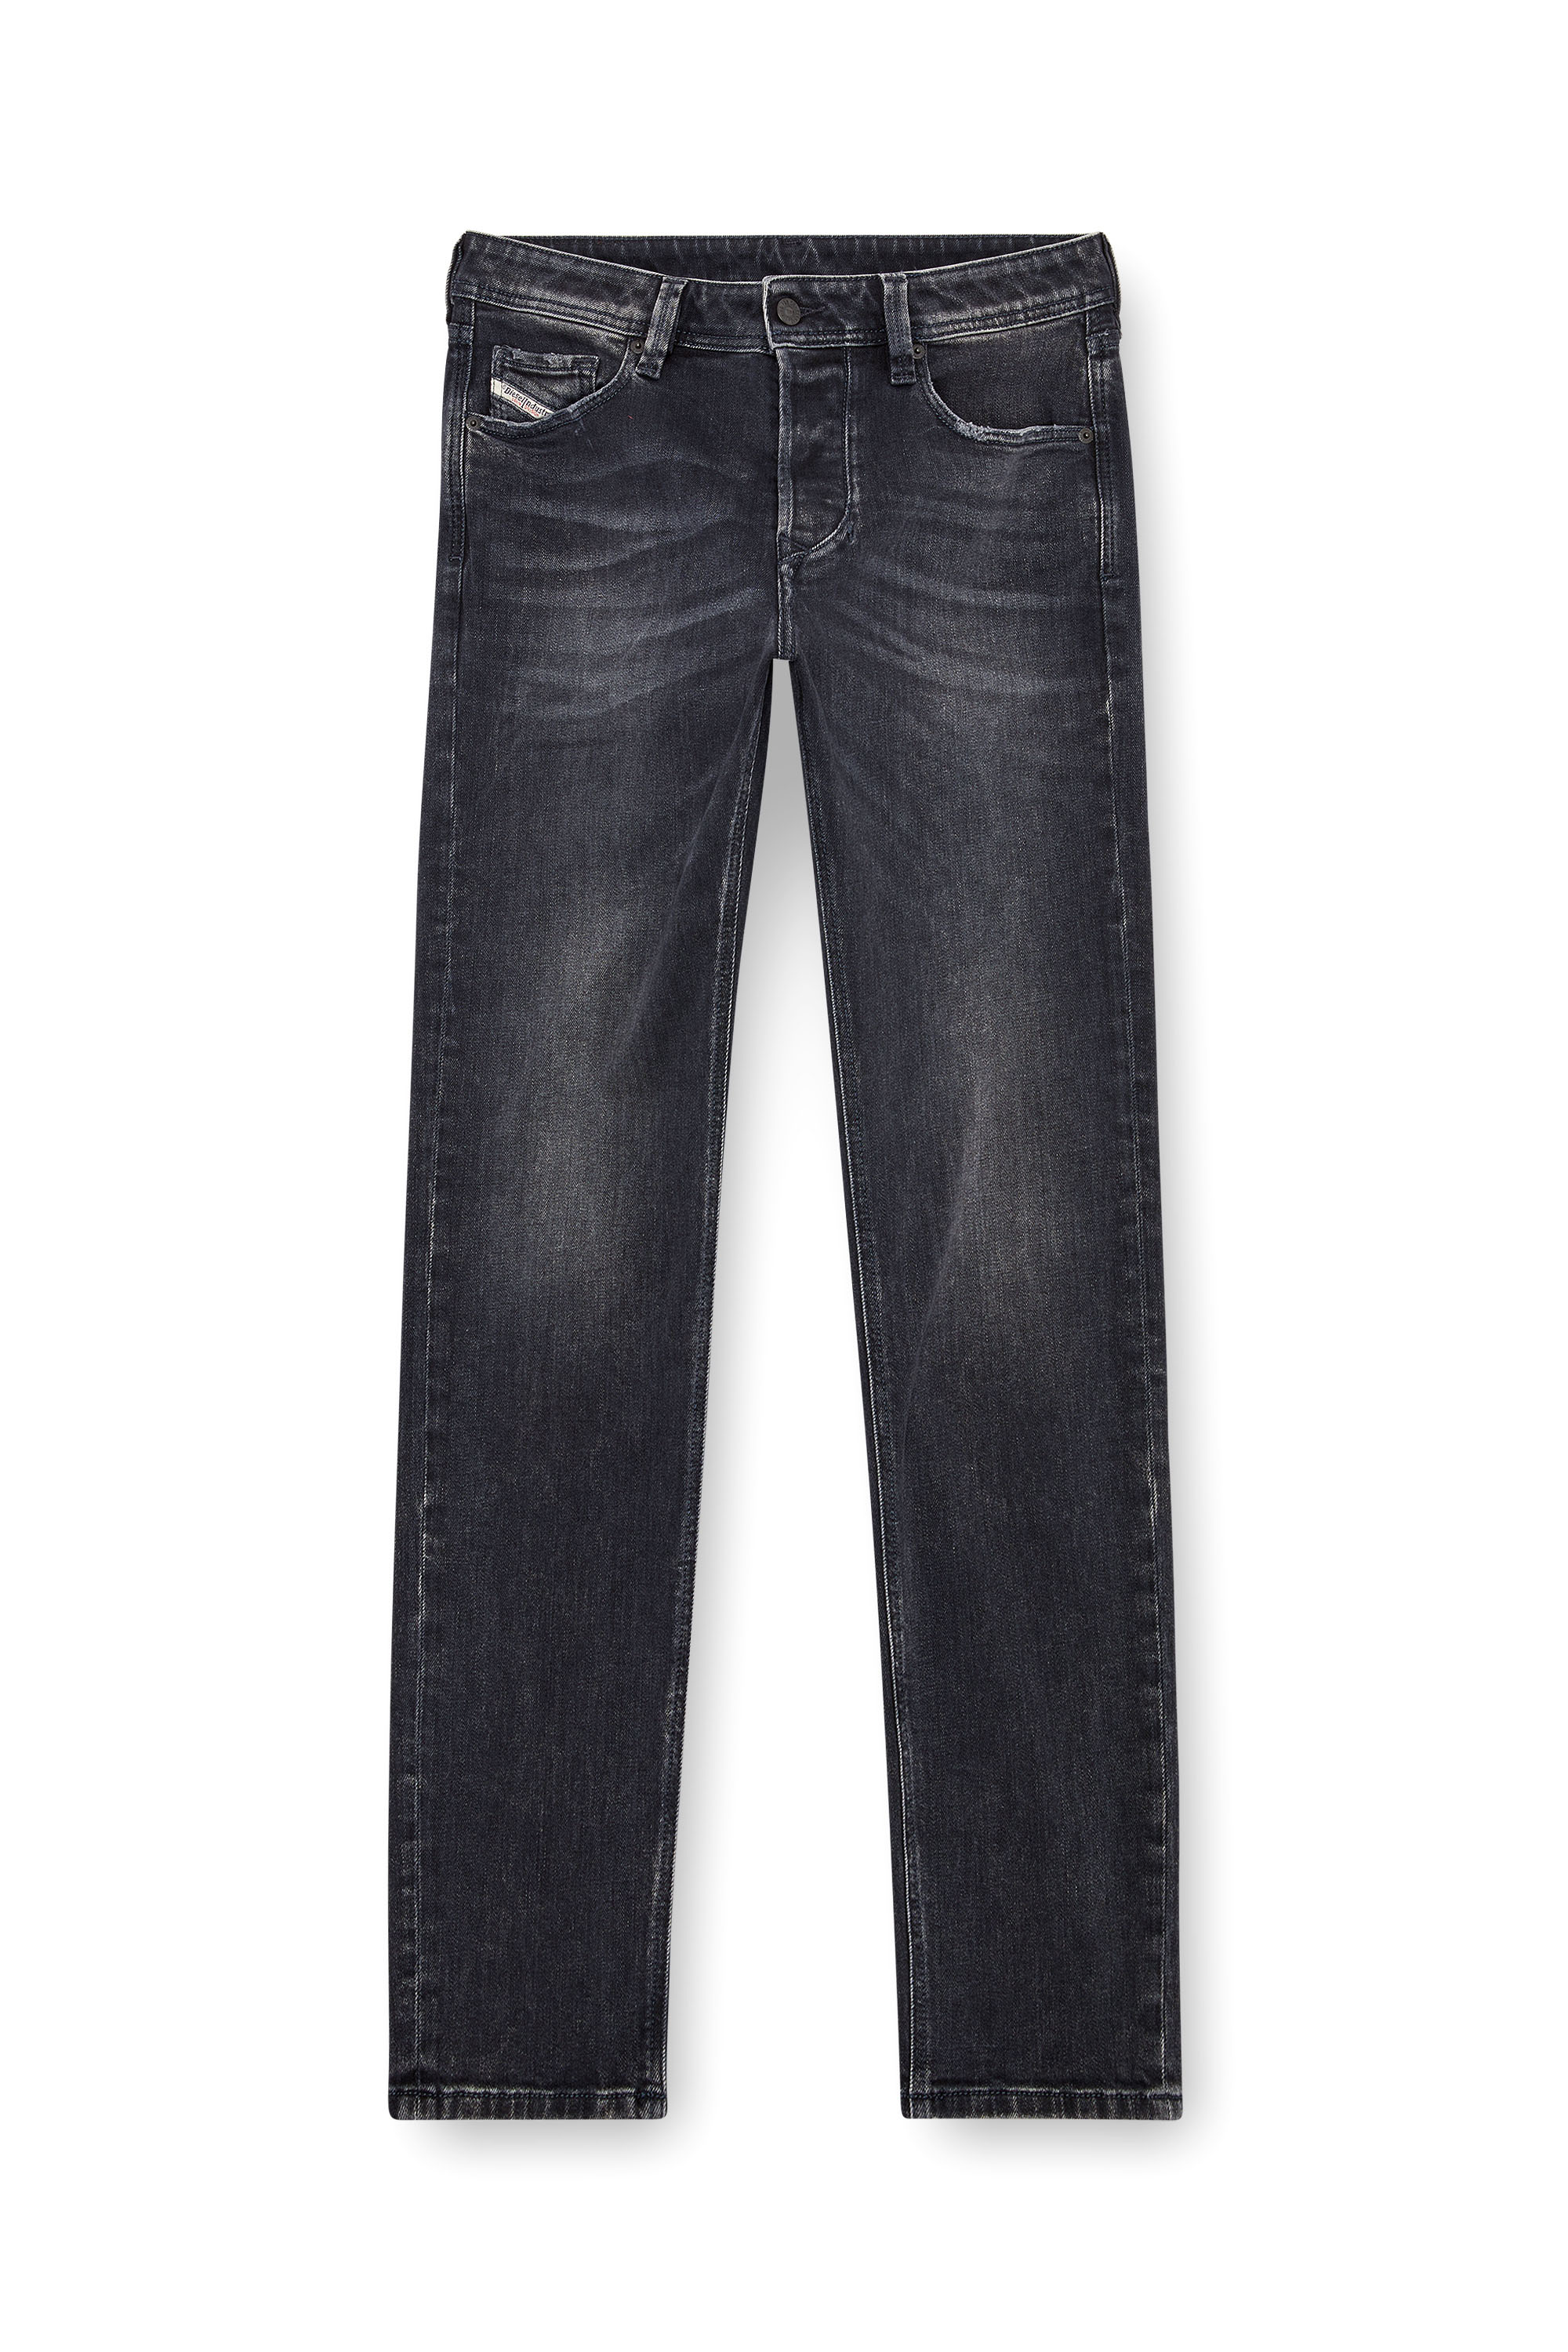 Tapered Jeans 1986 Larkee-Beex 09K51, Black/Dark grey - Jeans